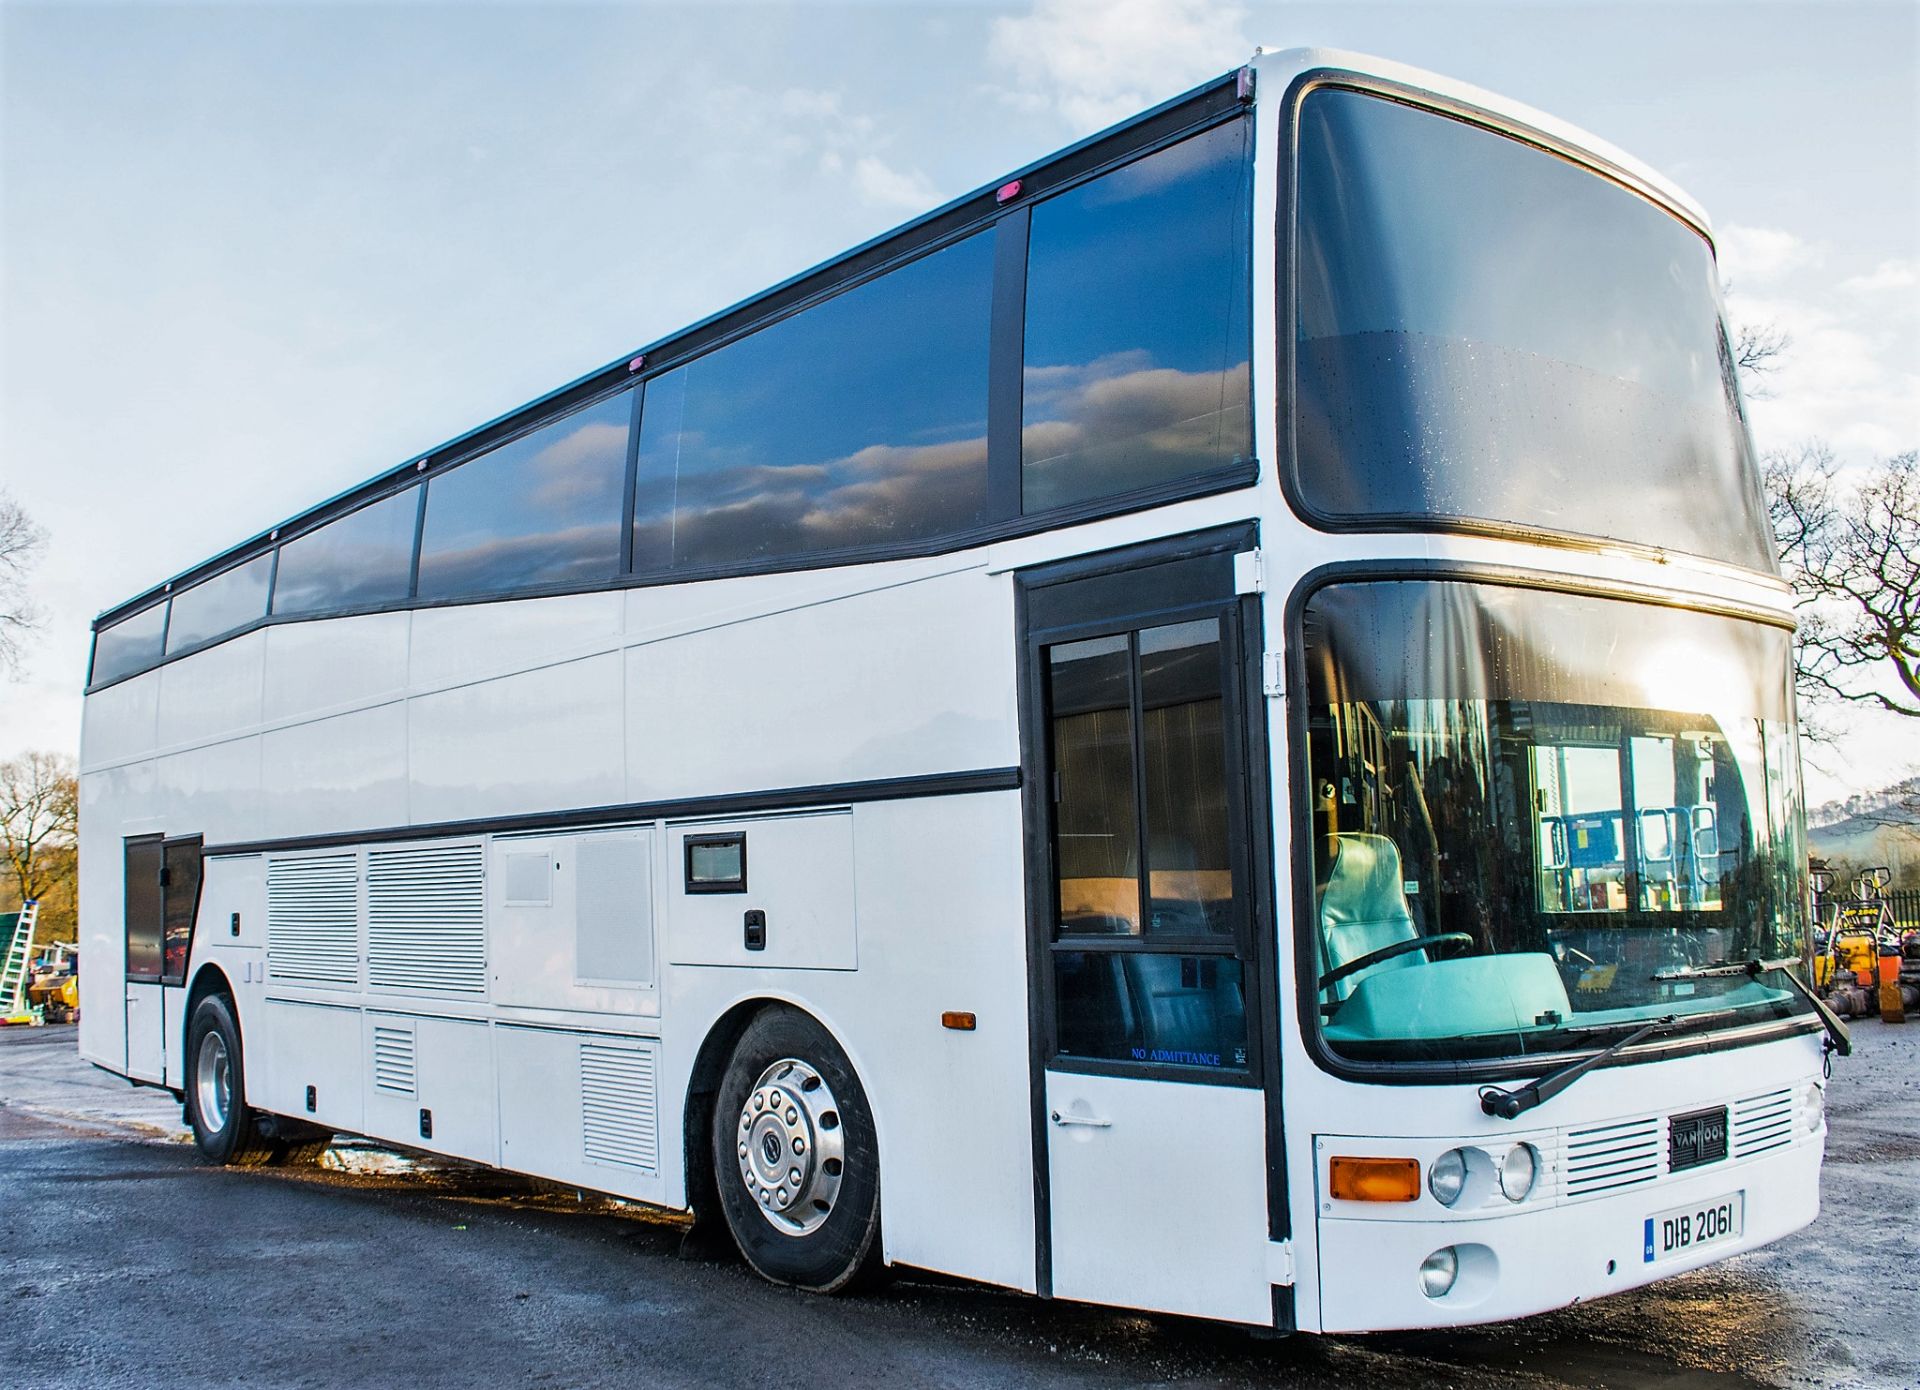 Vanhool double decker luxury tour coach Registration Number: DIB 2061 Date of Registration: 10/06/ - Image 2 of 24